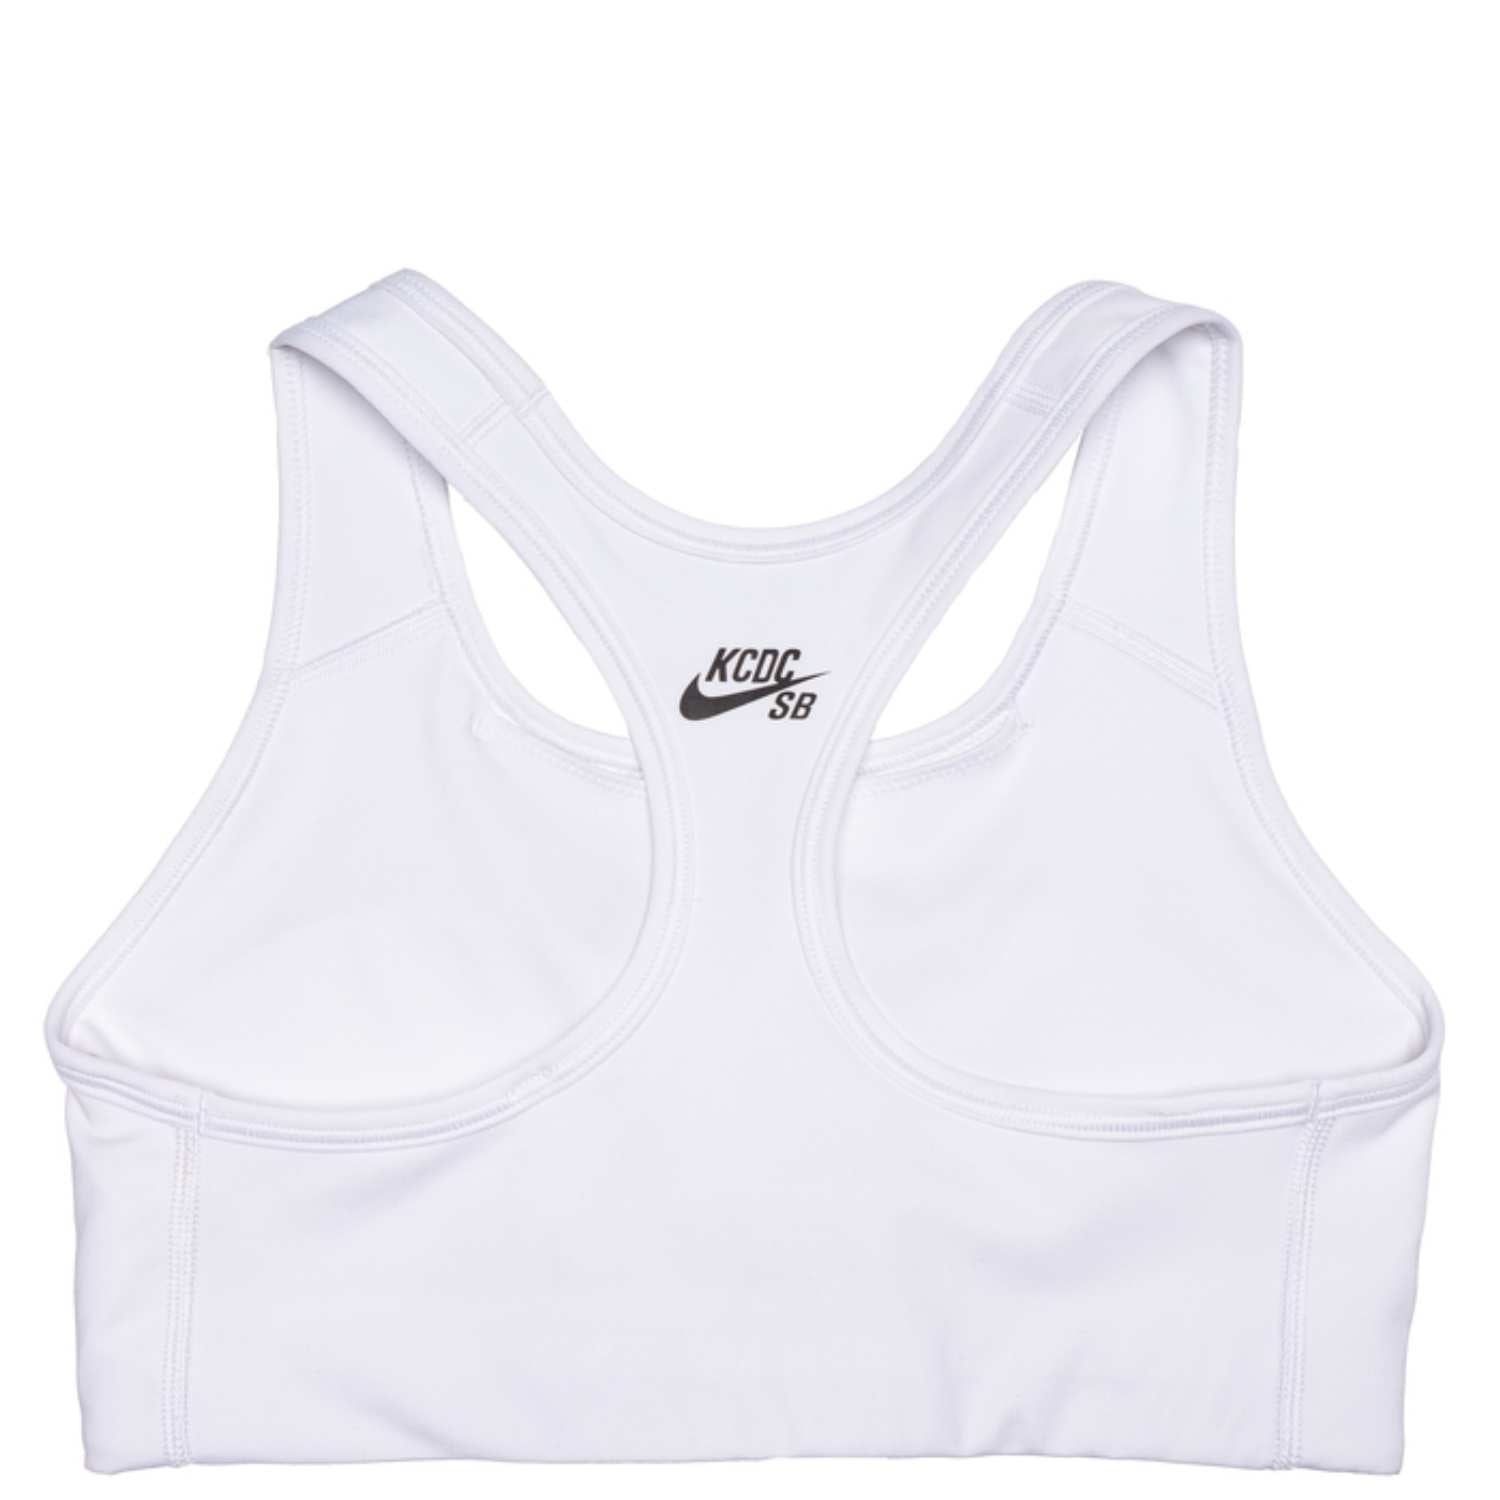 Girls' Sports Bras. Nike SK